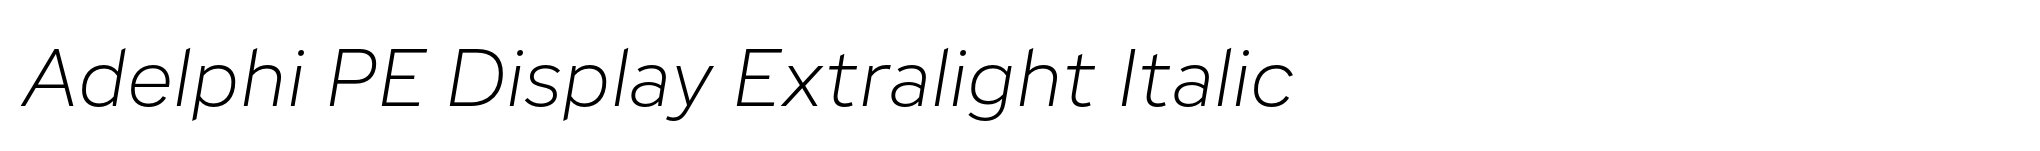 Adelphi PE Display Extralight Italic image